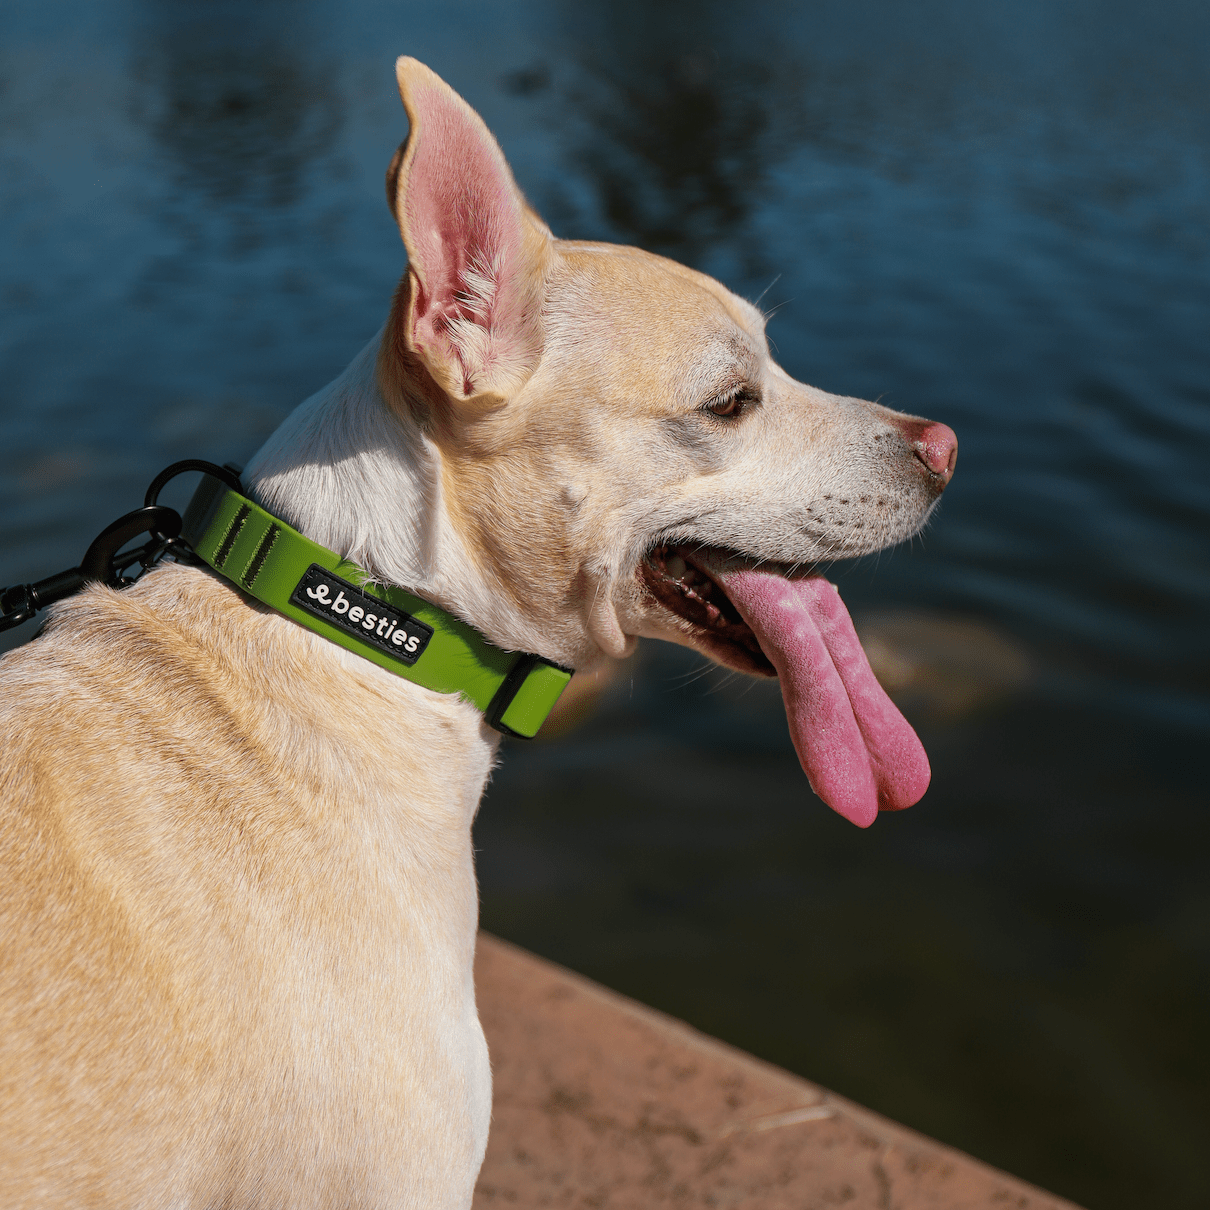 Black Waterproof Adjustable Dog Collar